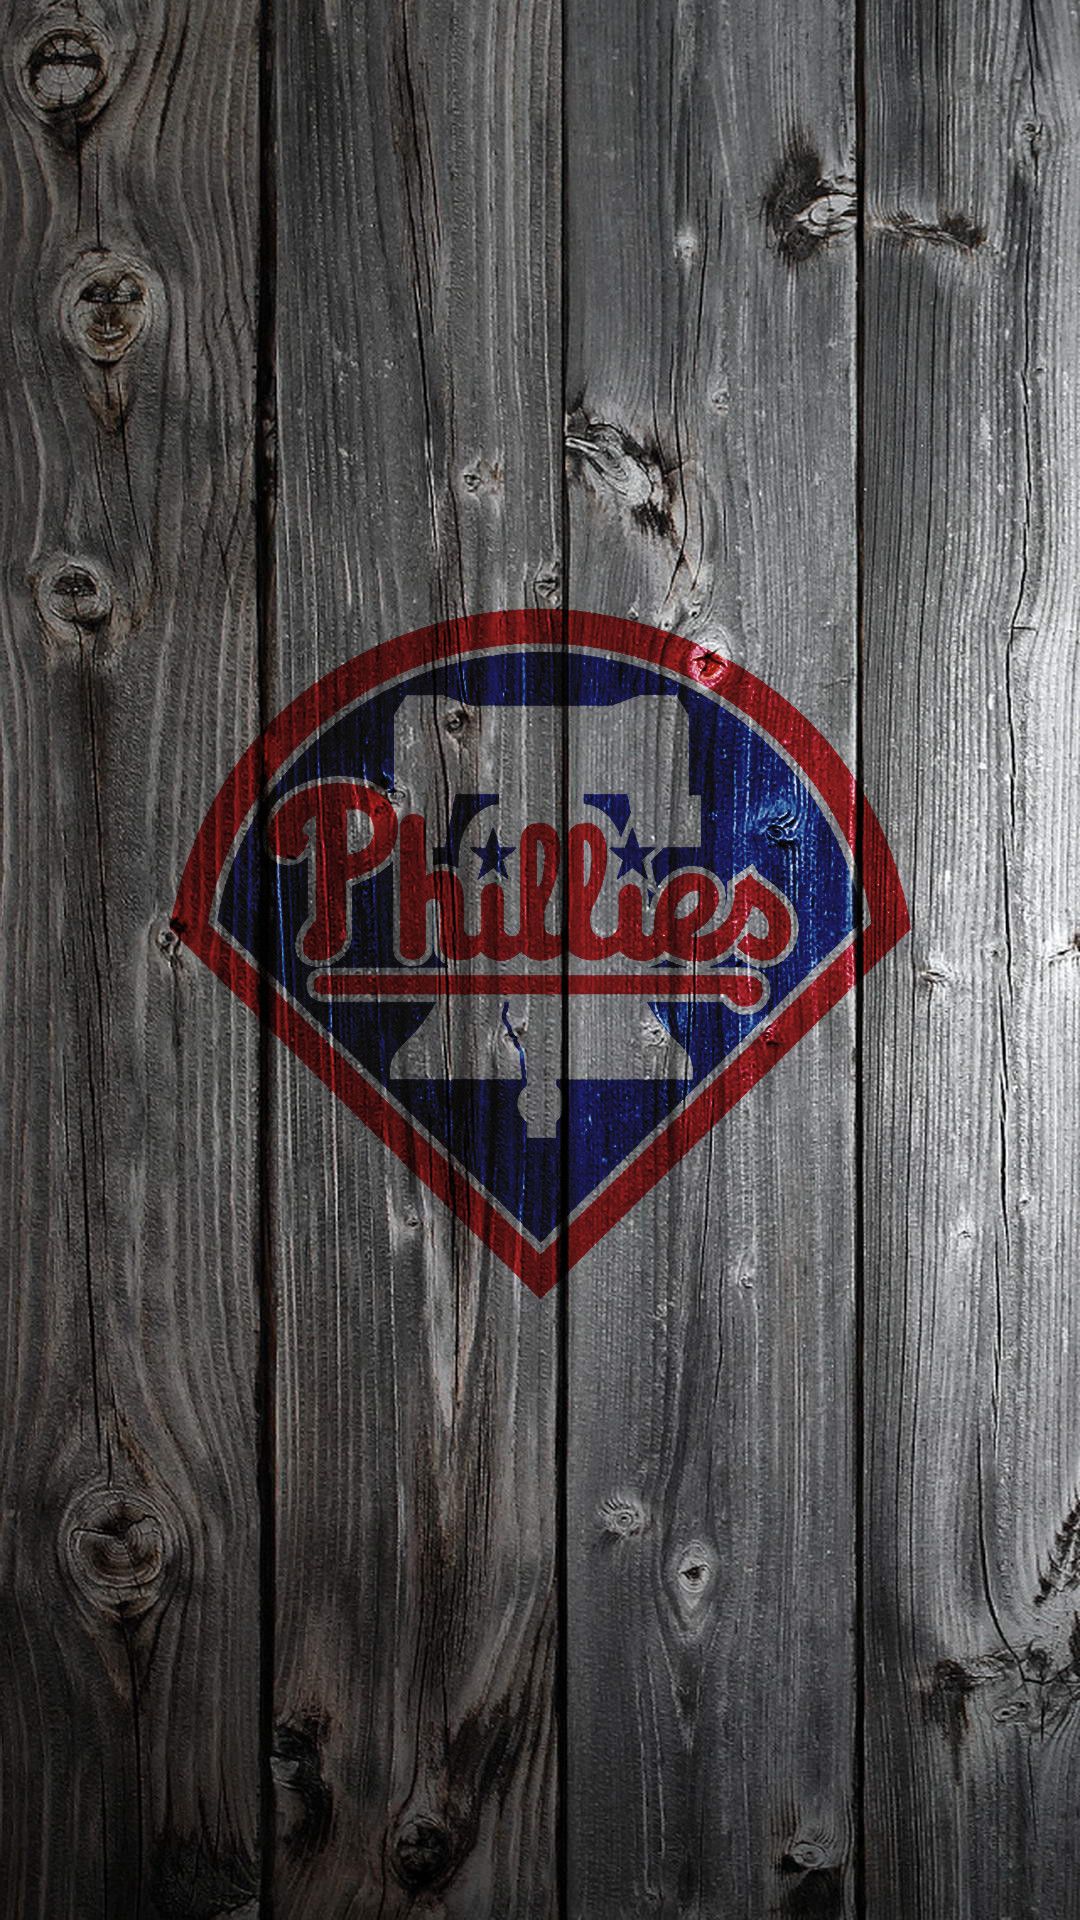 Philadelphia Phillies wallpaper by Densports - Download on ZEDGE™